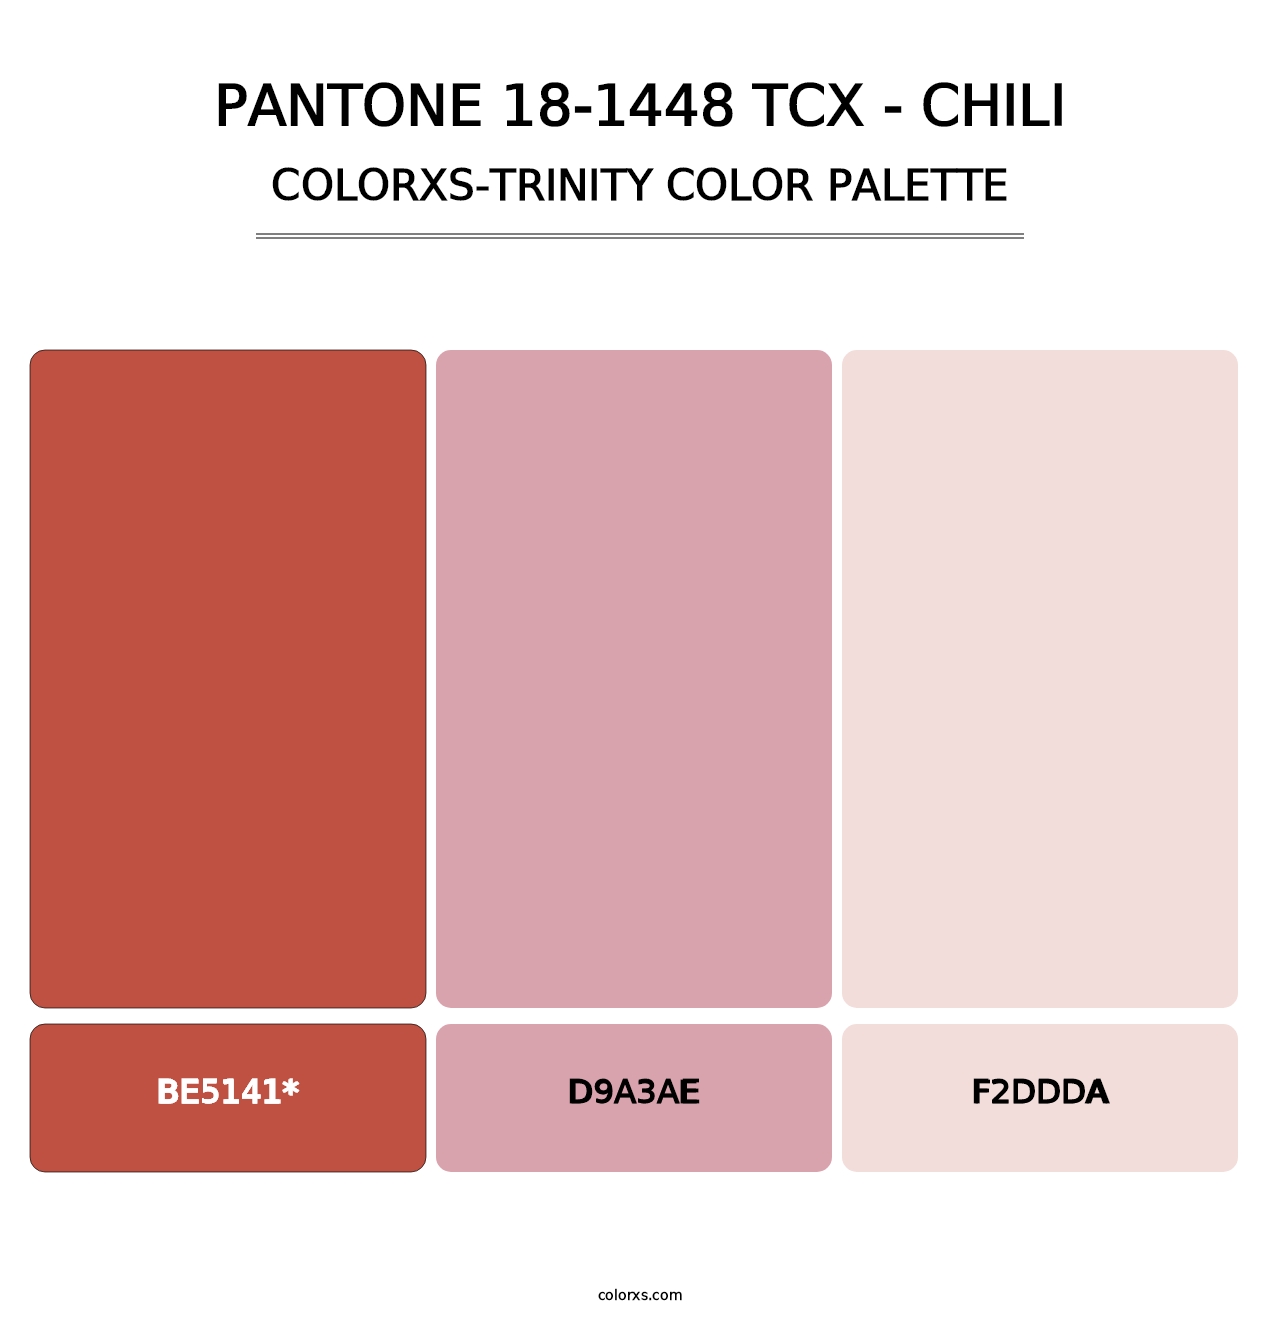 PANTONE 18-1448 TCX - Chili - Colorxs Trinity Palette